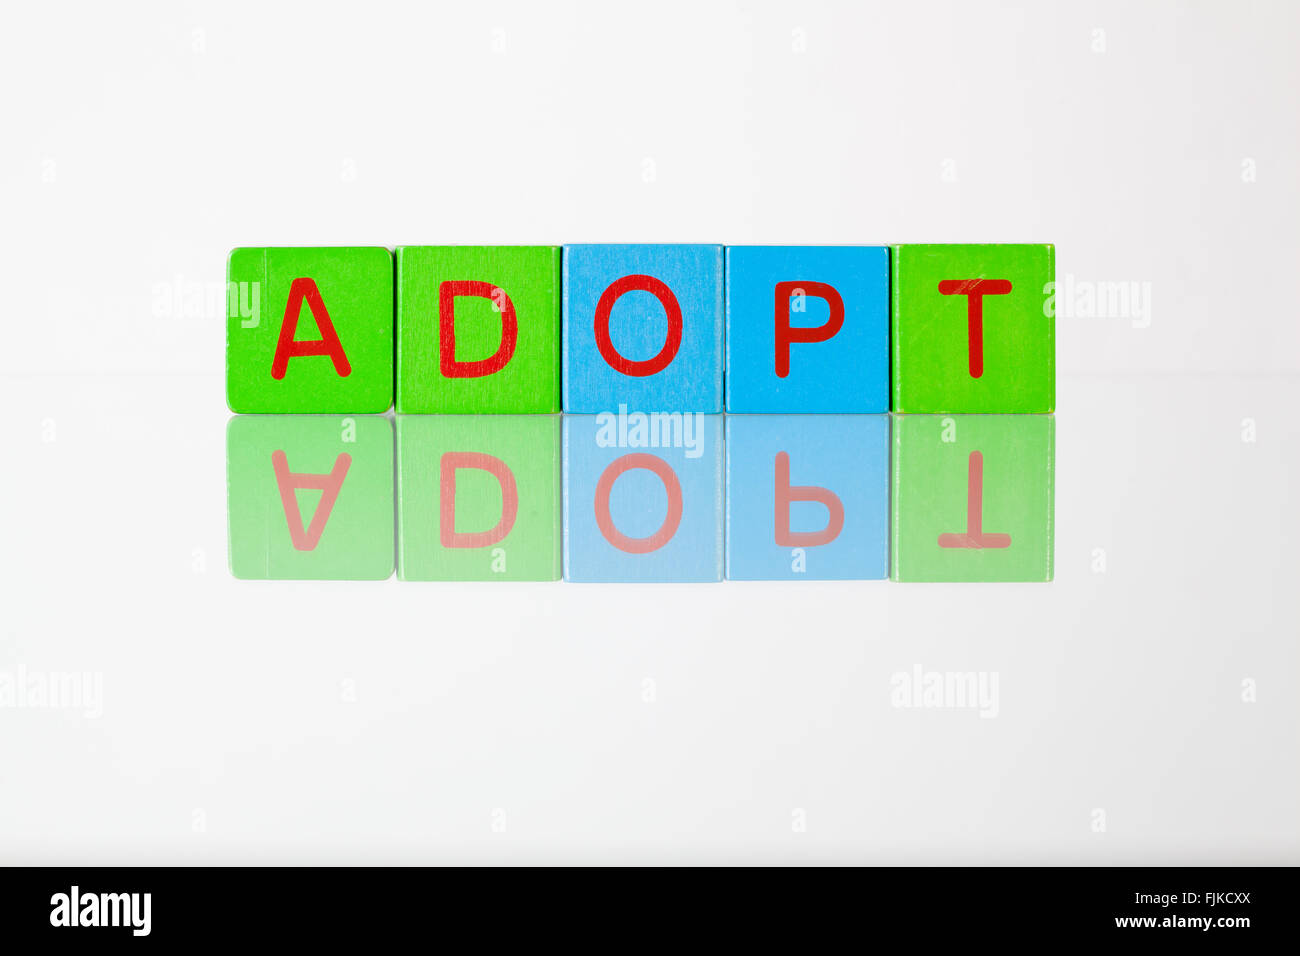 Adopt - an inscription from children's wooden blocks Stock Photo